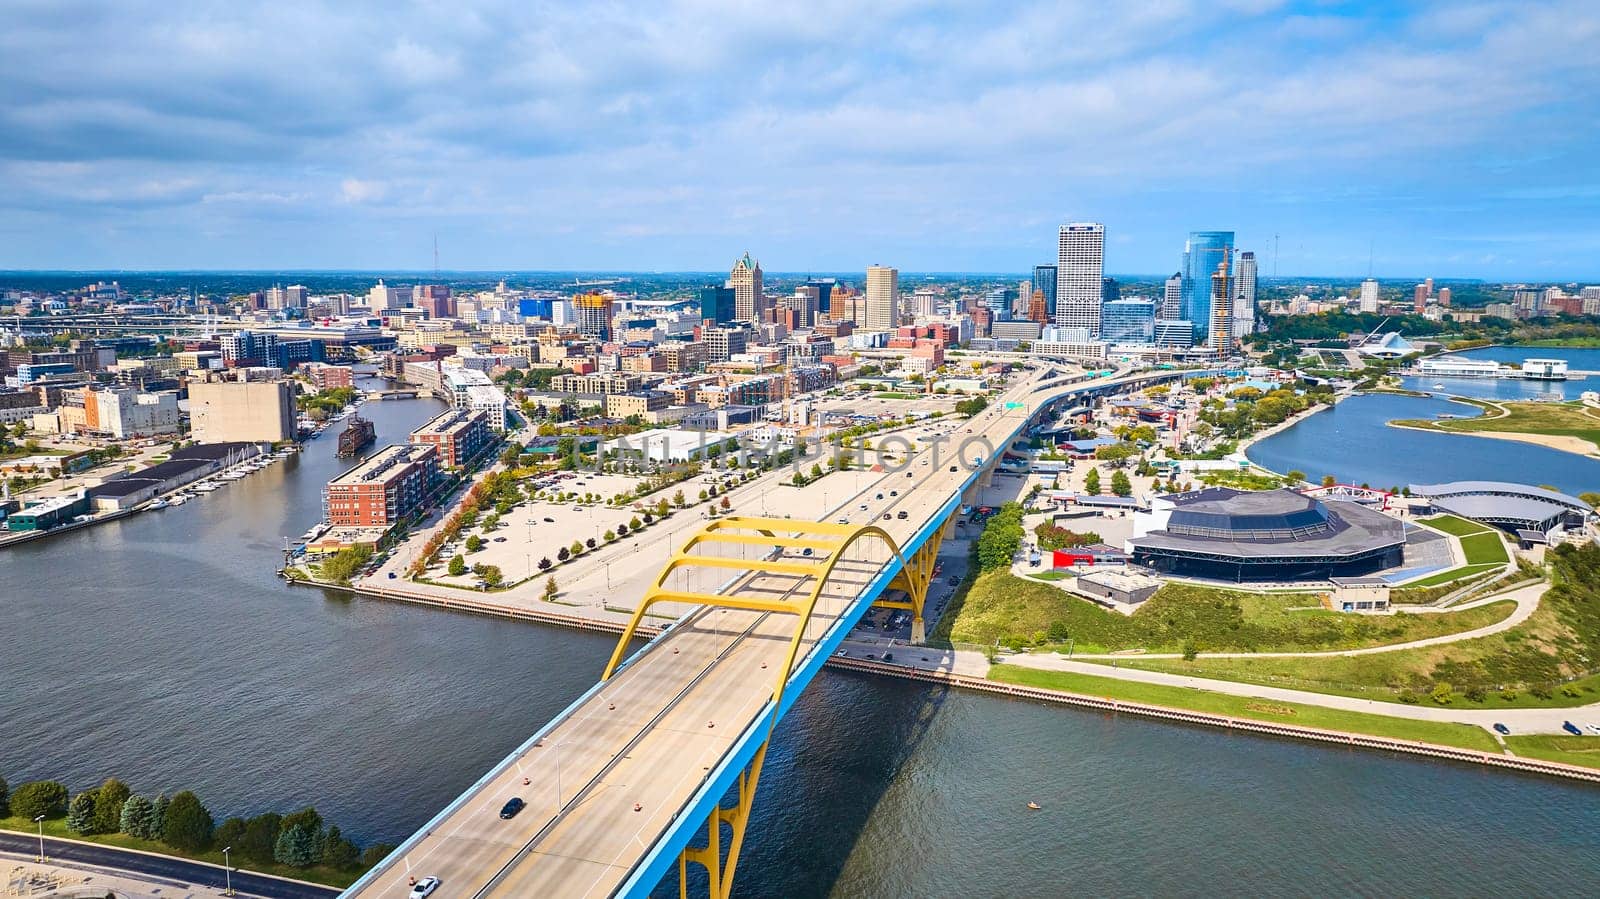 Aerial View of Milwaukee Bridge, Stadium, and Urban Skyline by njproductions